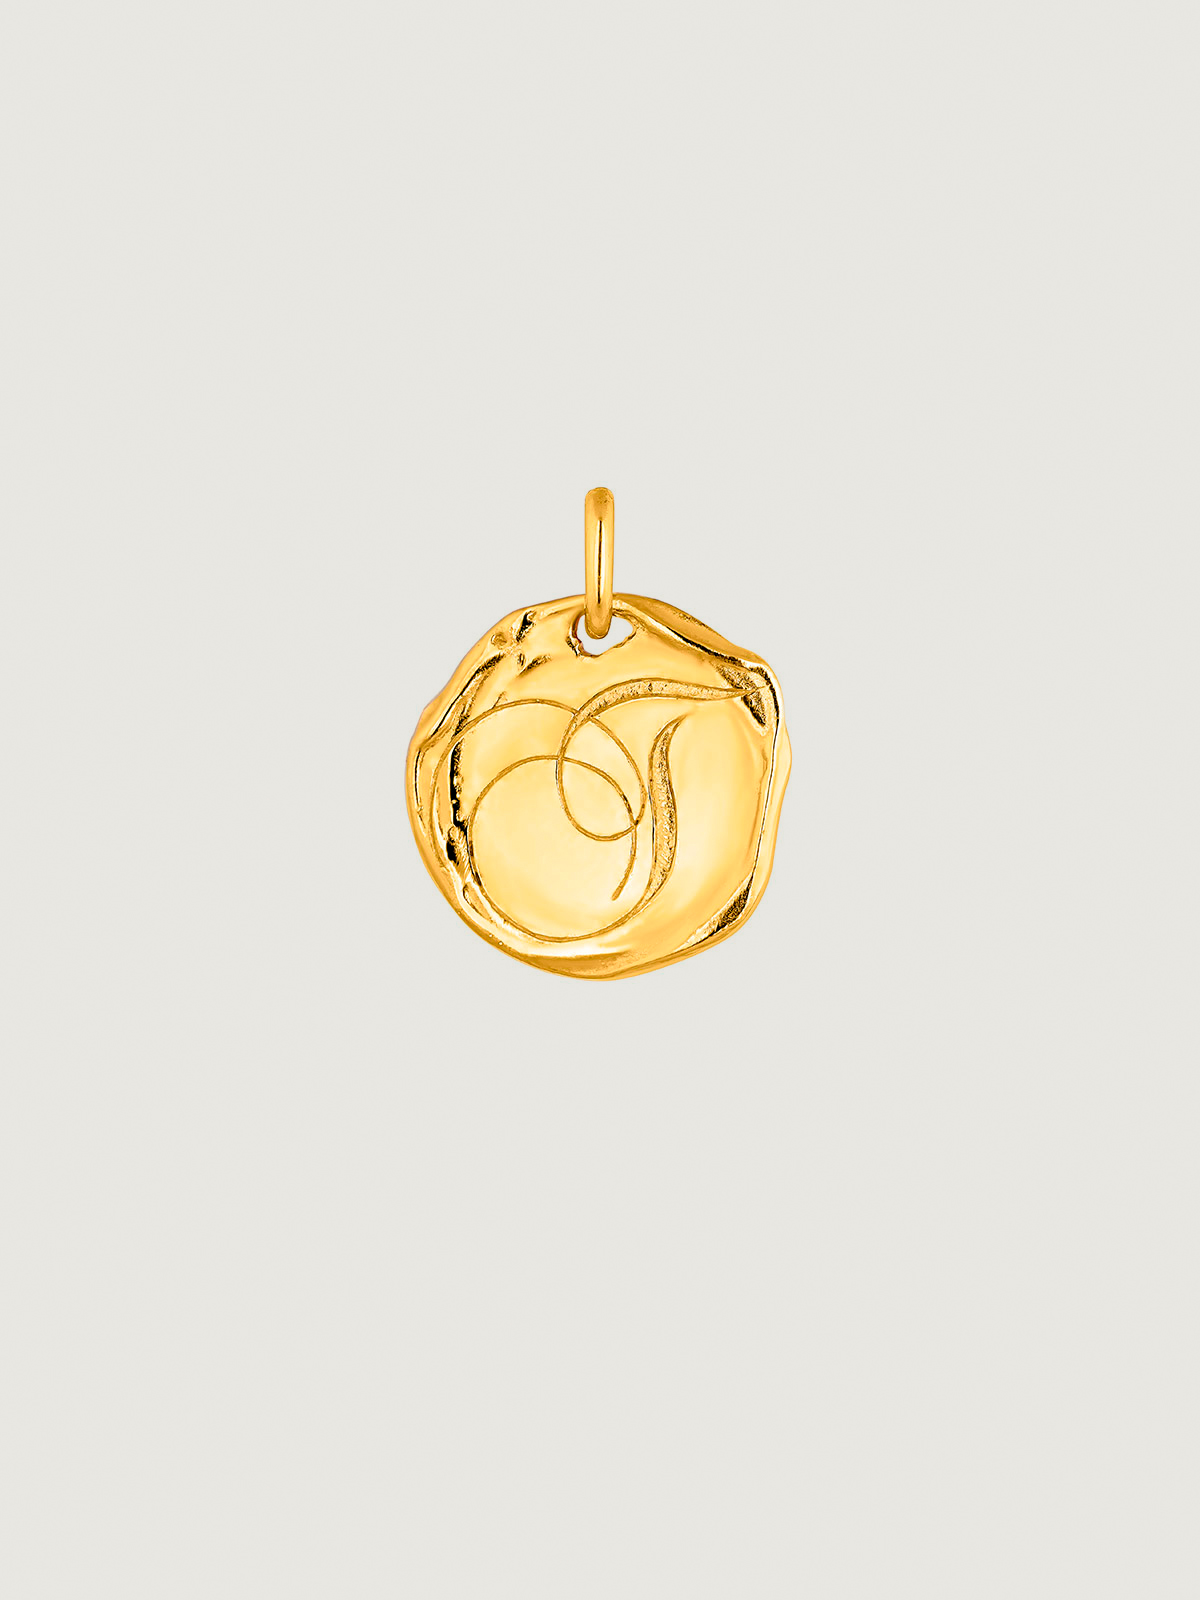 Charm artesanal de plata 925 bañada en oro amarillo de 18K con inicial T